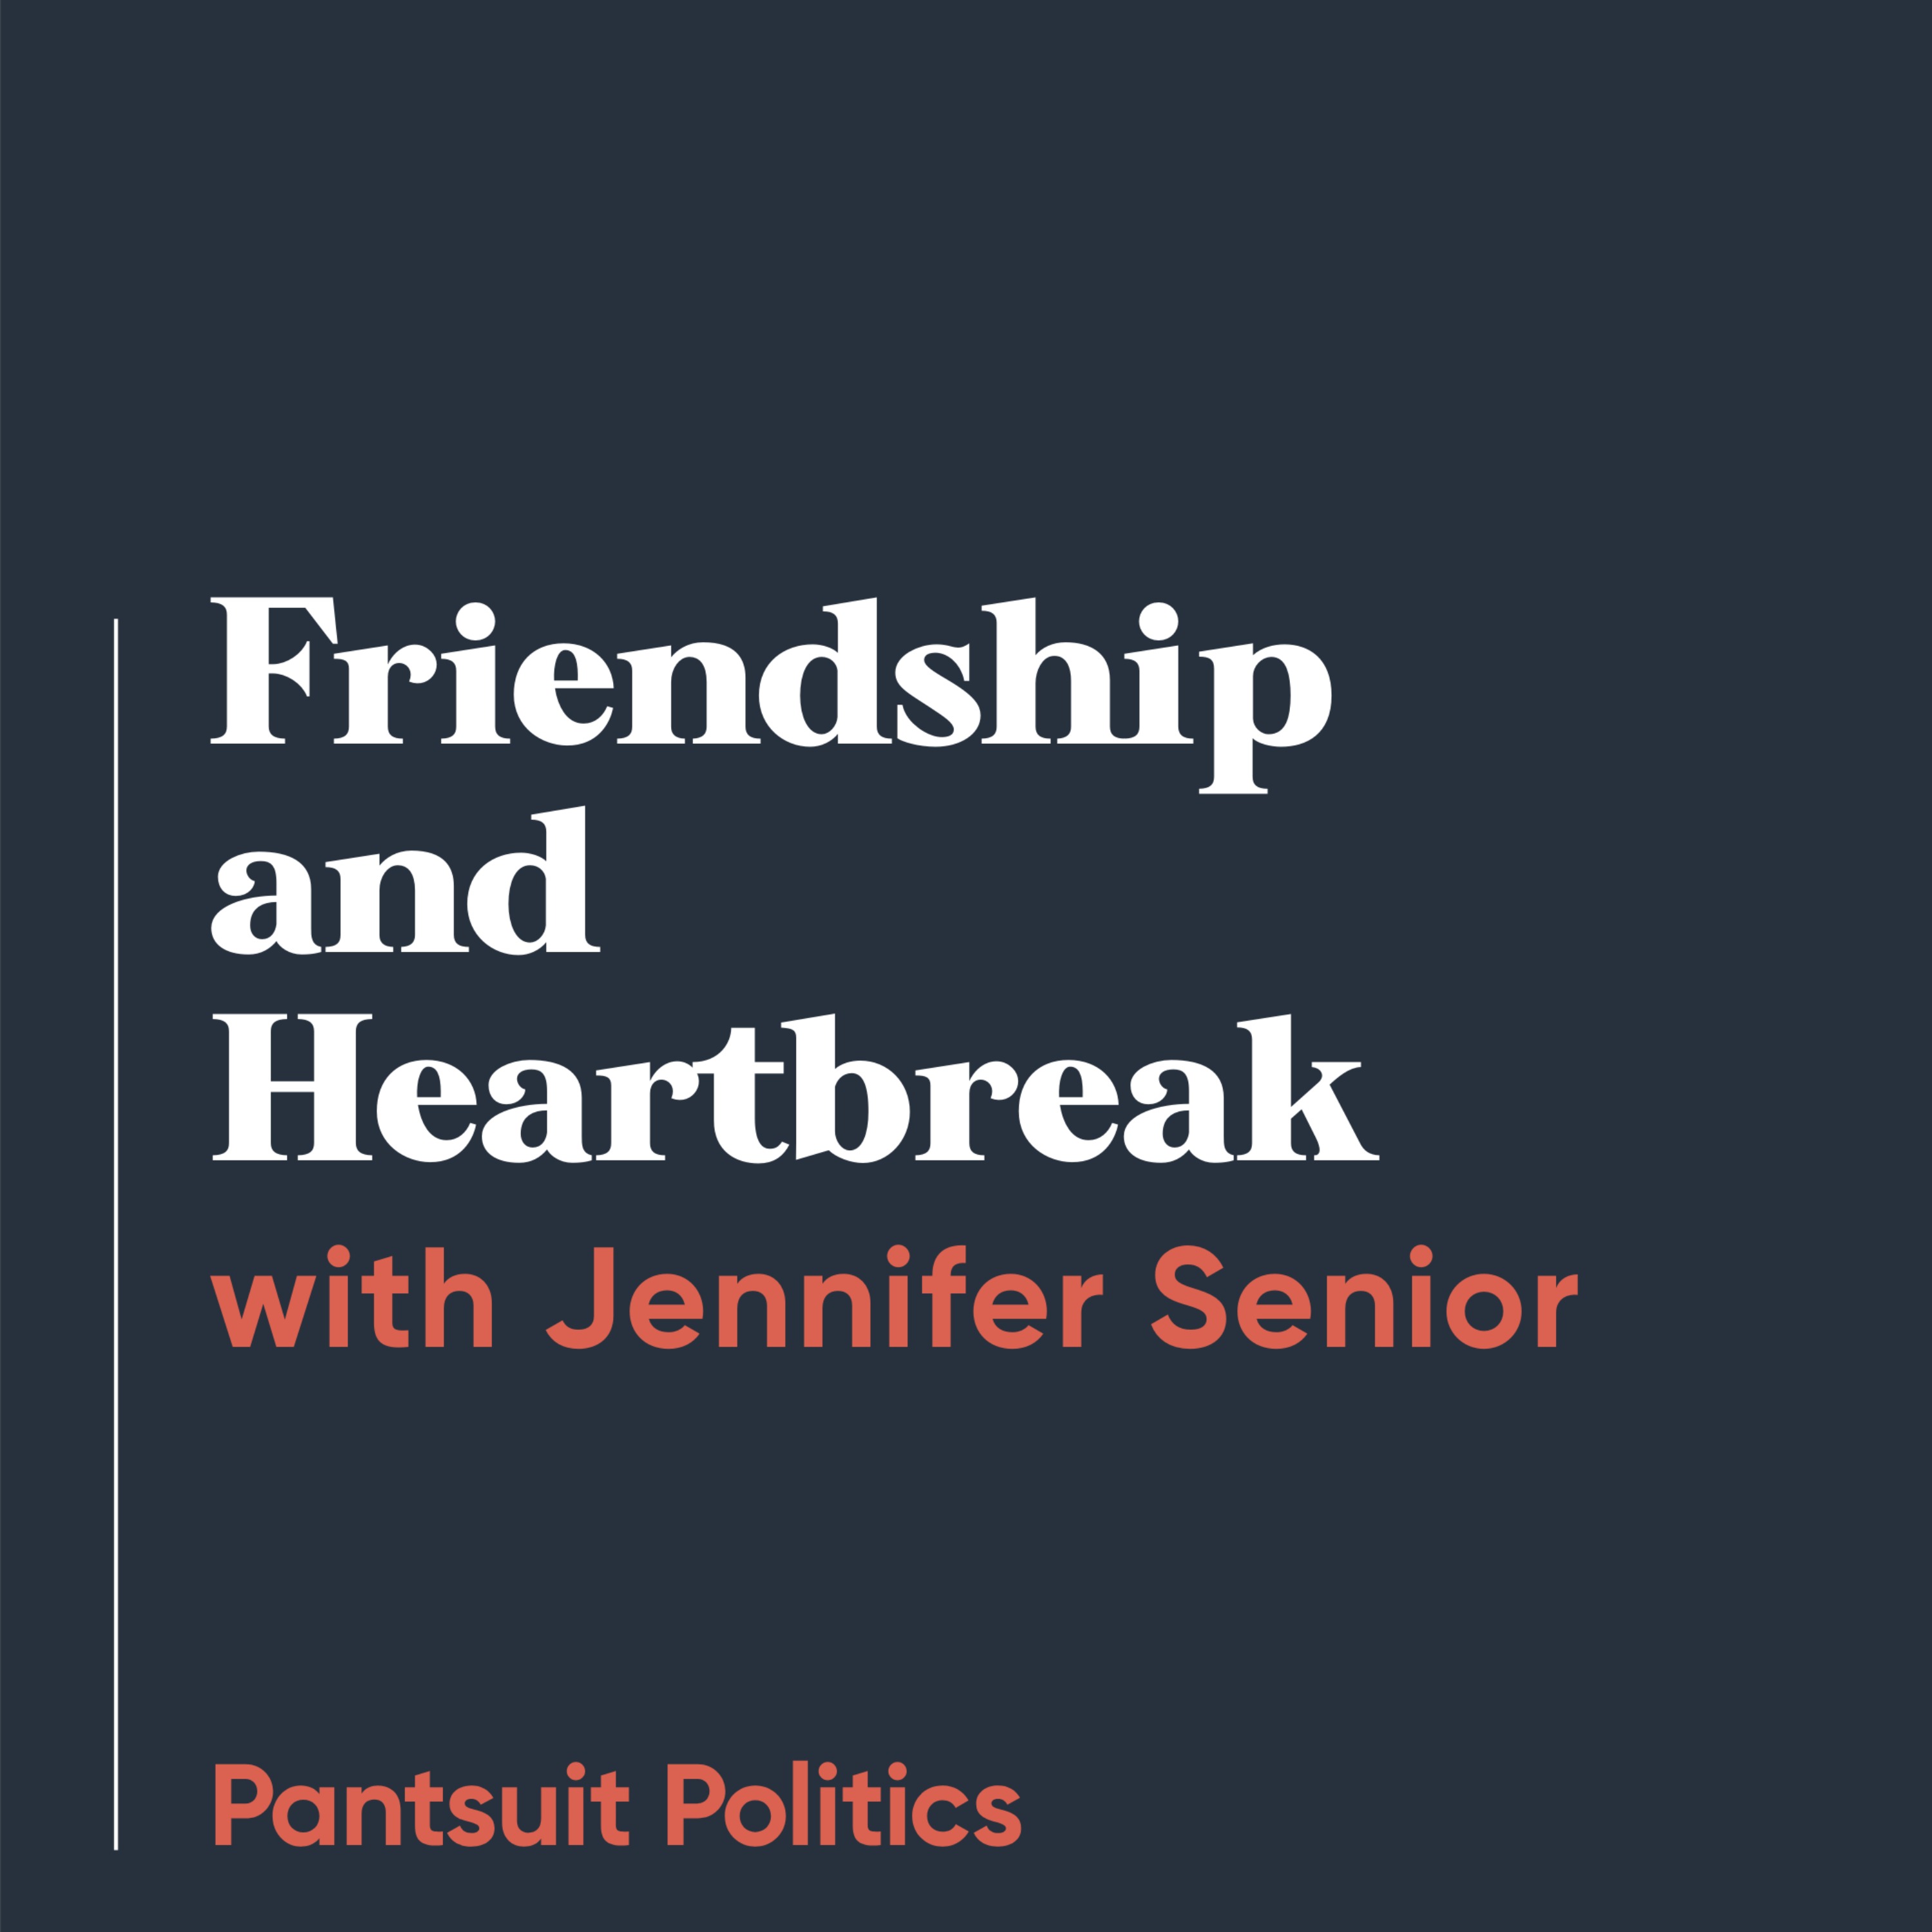 Friendship and Heartbreak with Jennifer Senior